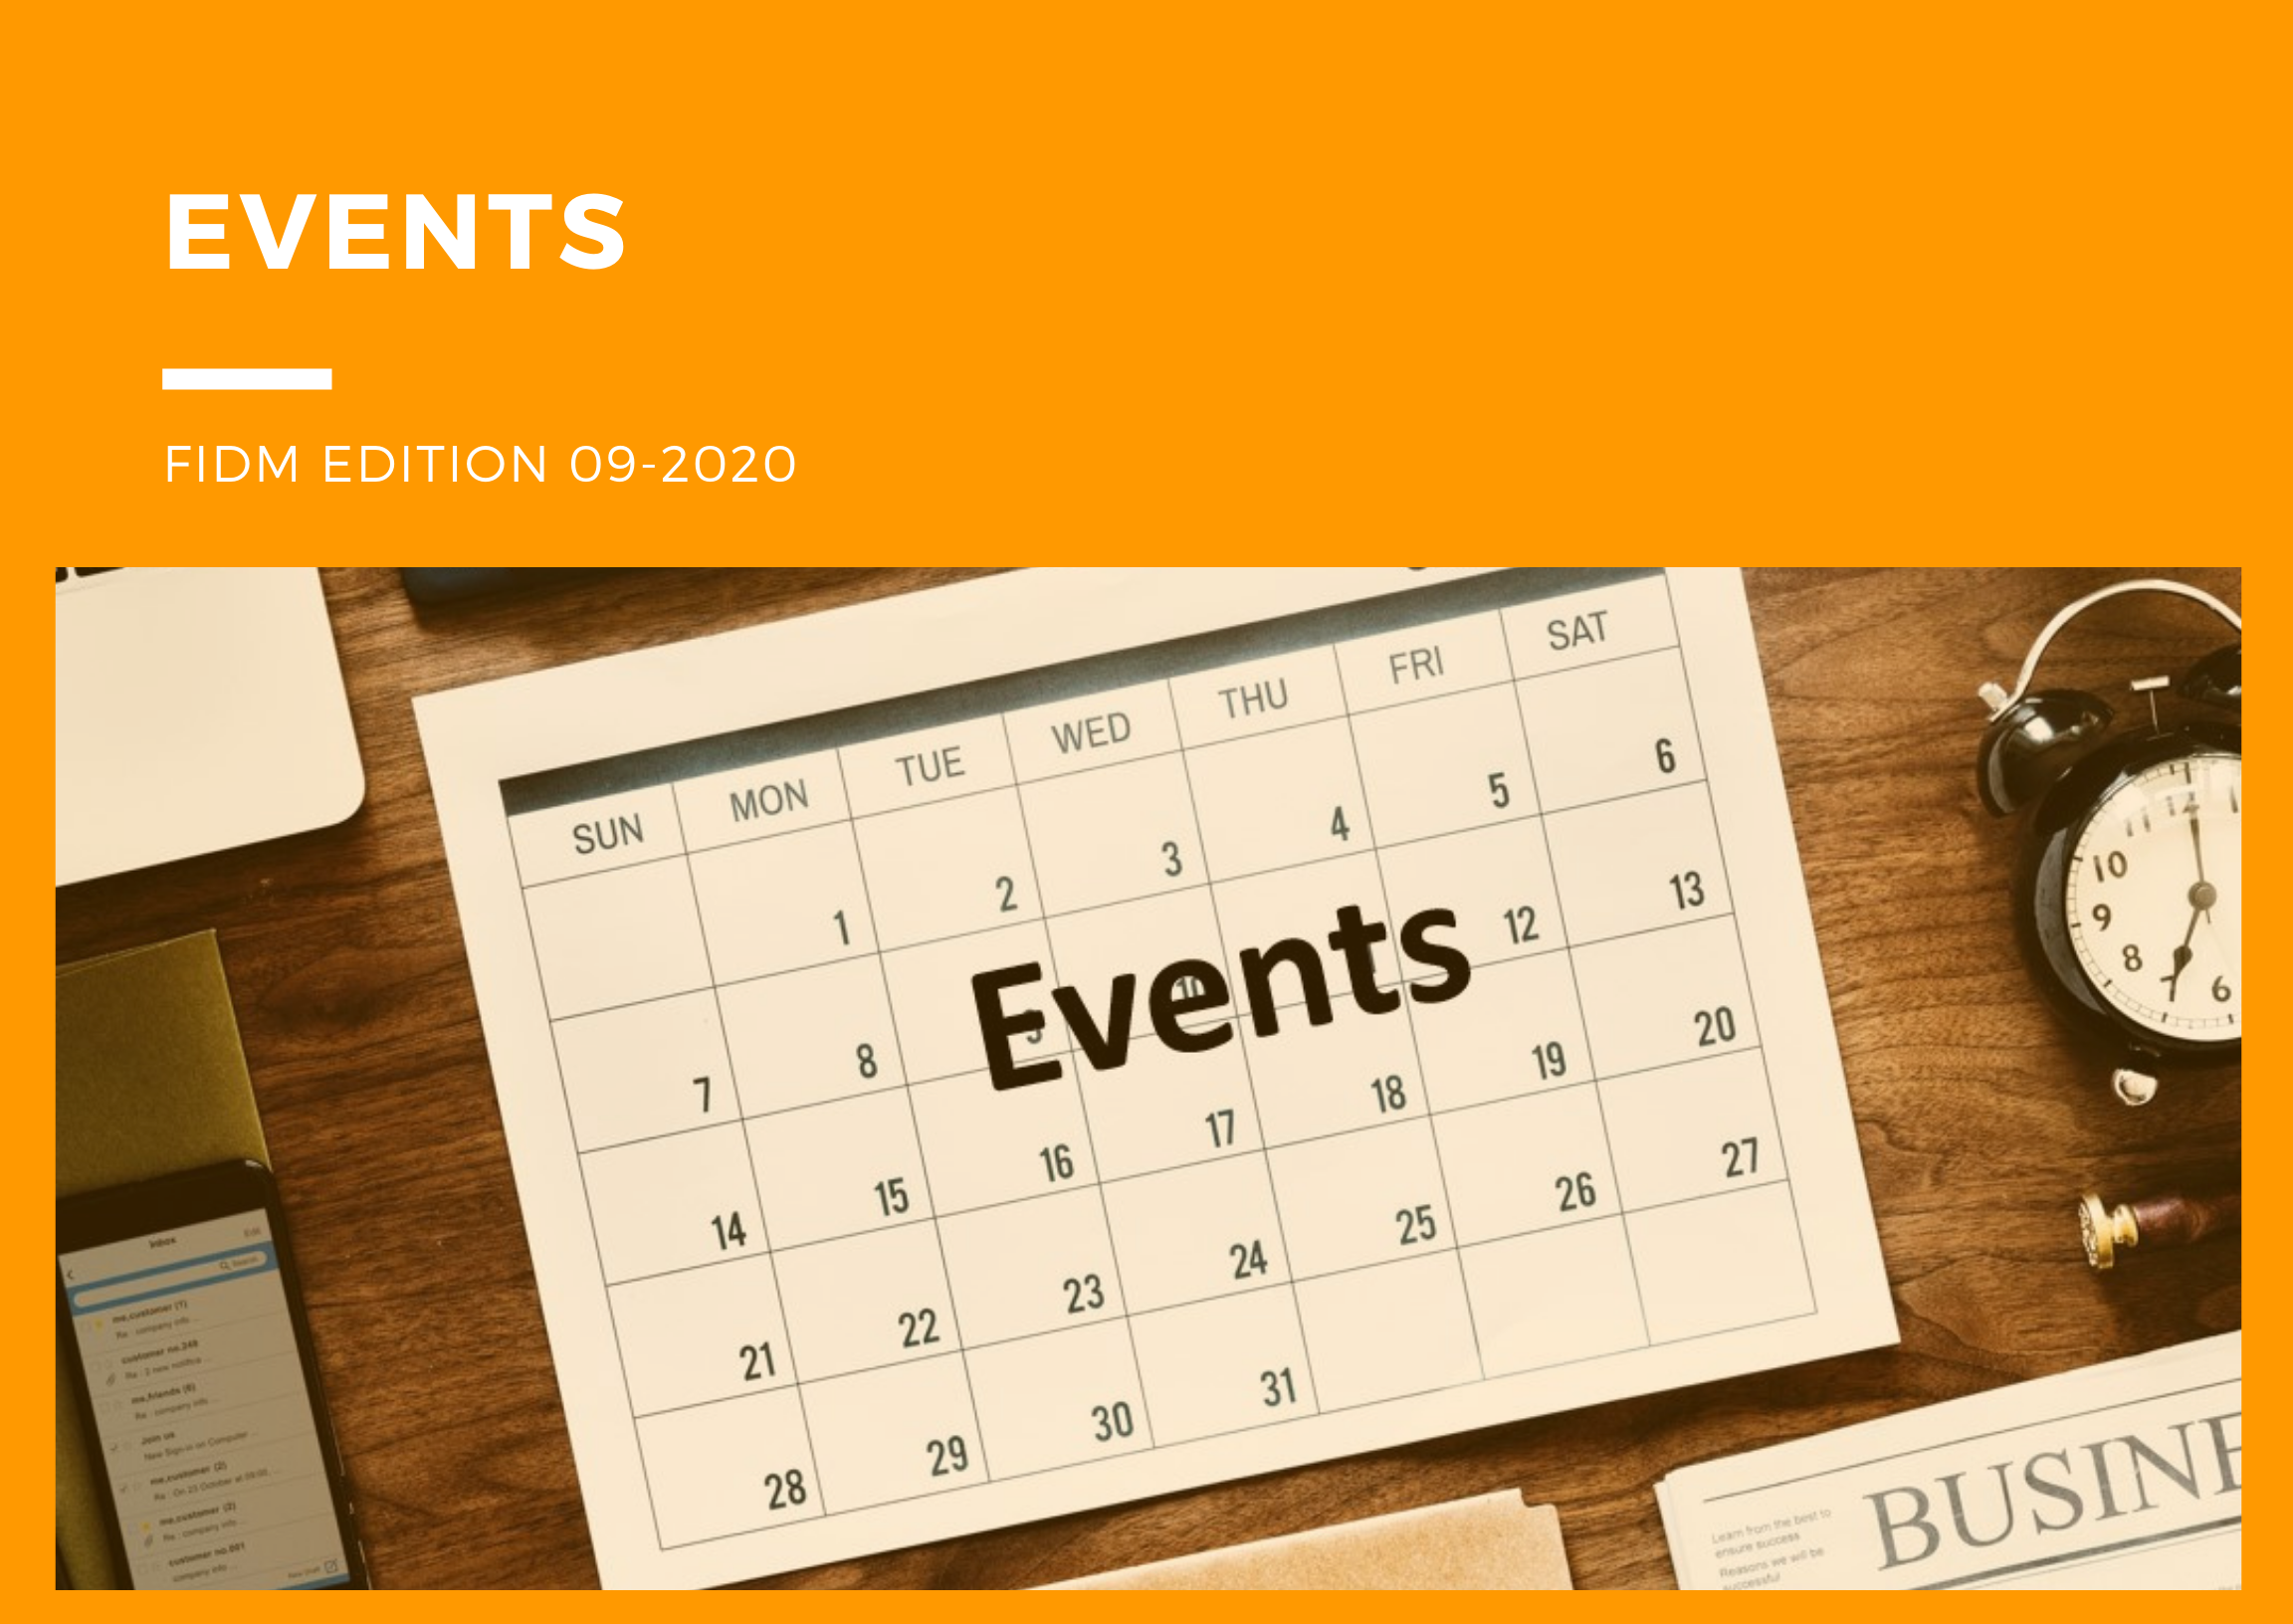 FIDM 09-2020 Events